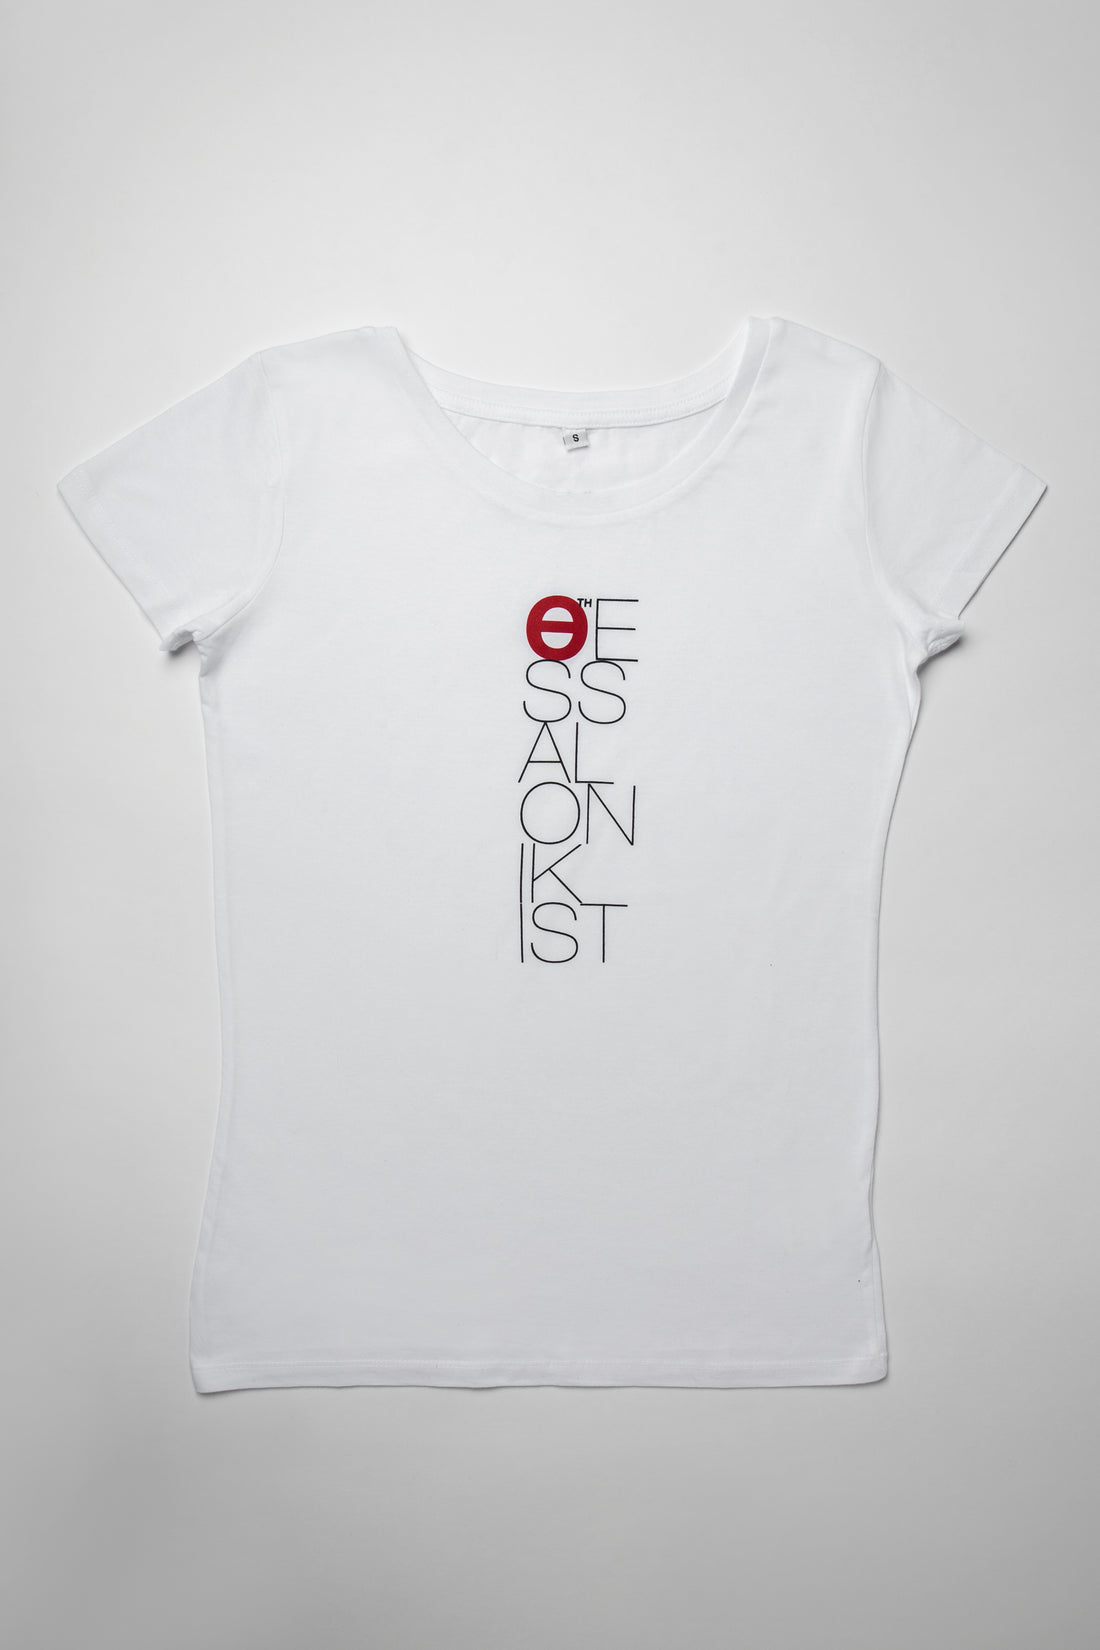 Thessalonikist cotton T-shirt for her